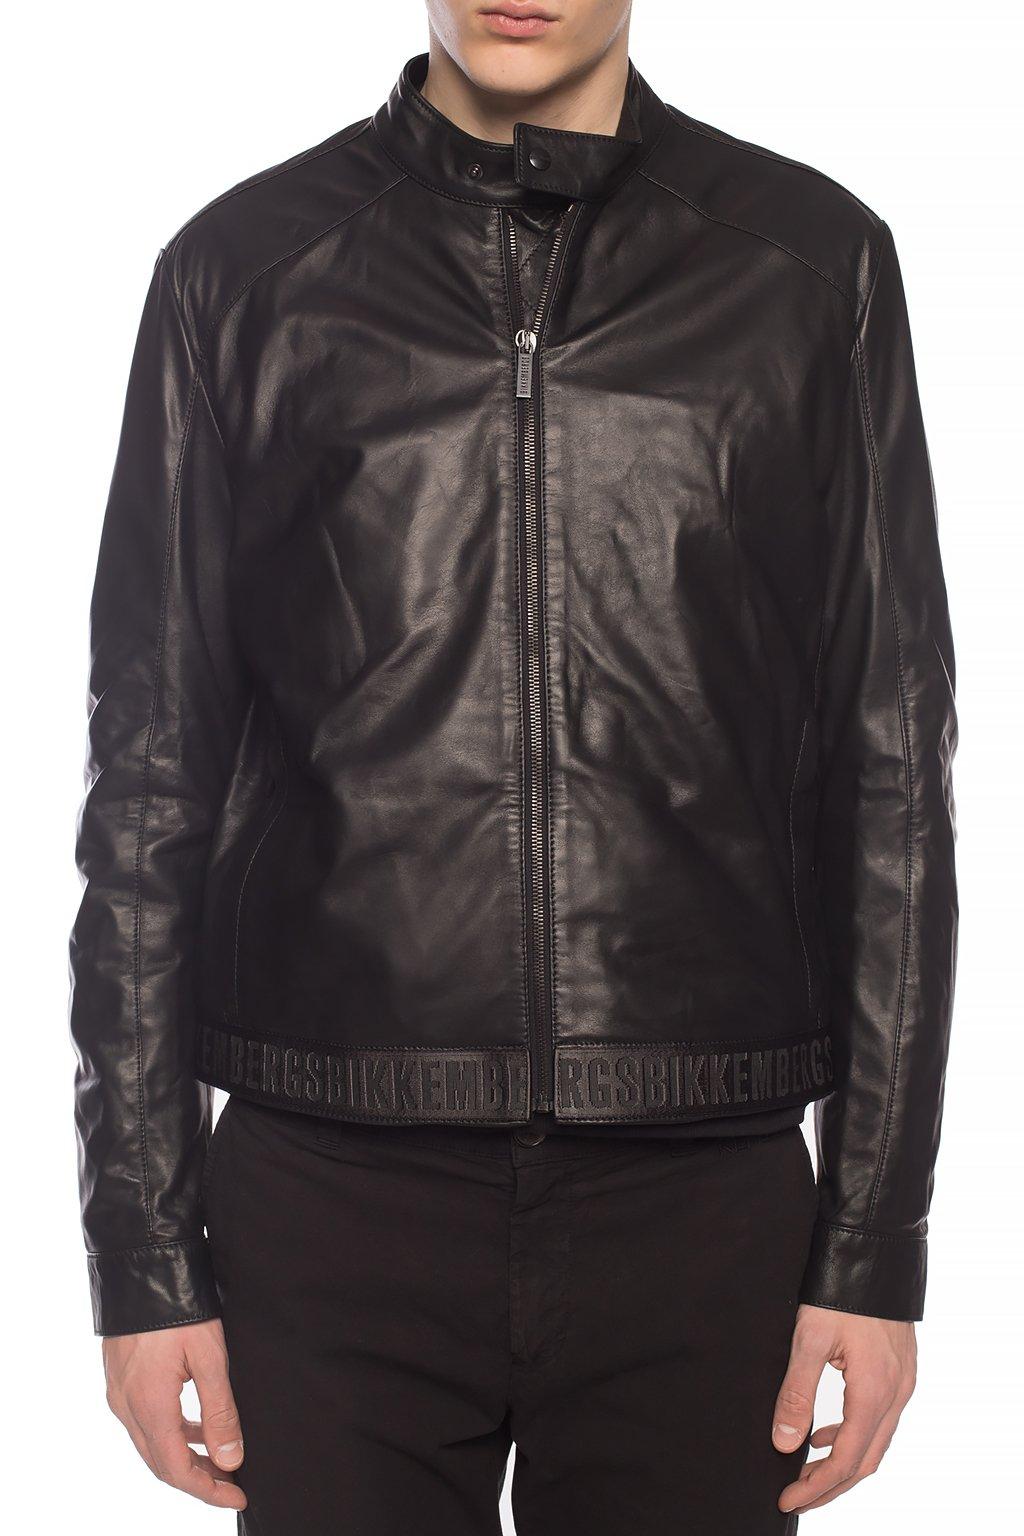 Dirk Bikkembergs Leather Jacket Black for Men - Lyst